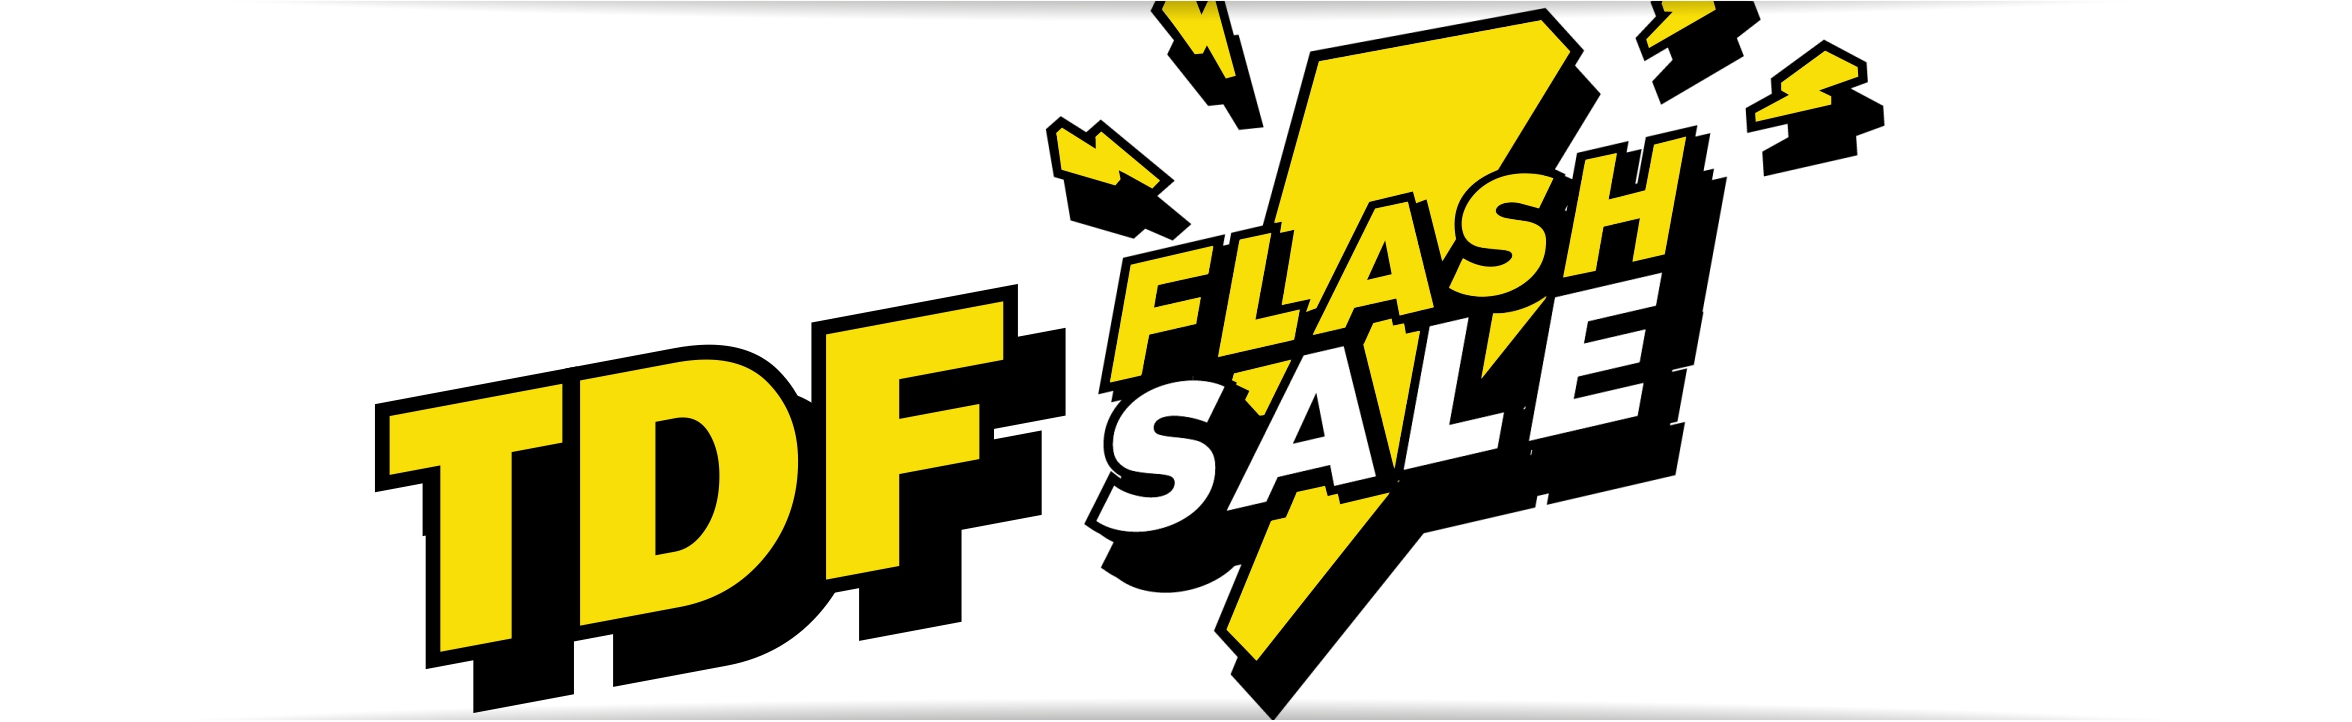 TDF Flash Sale_HUN